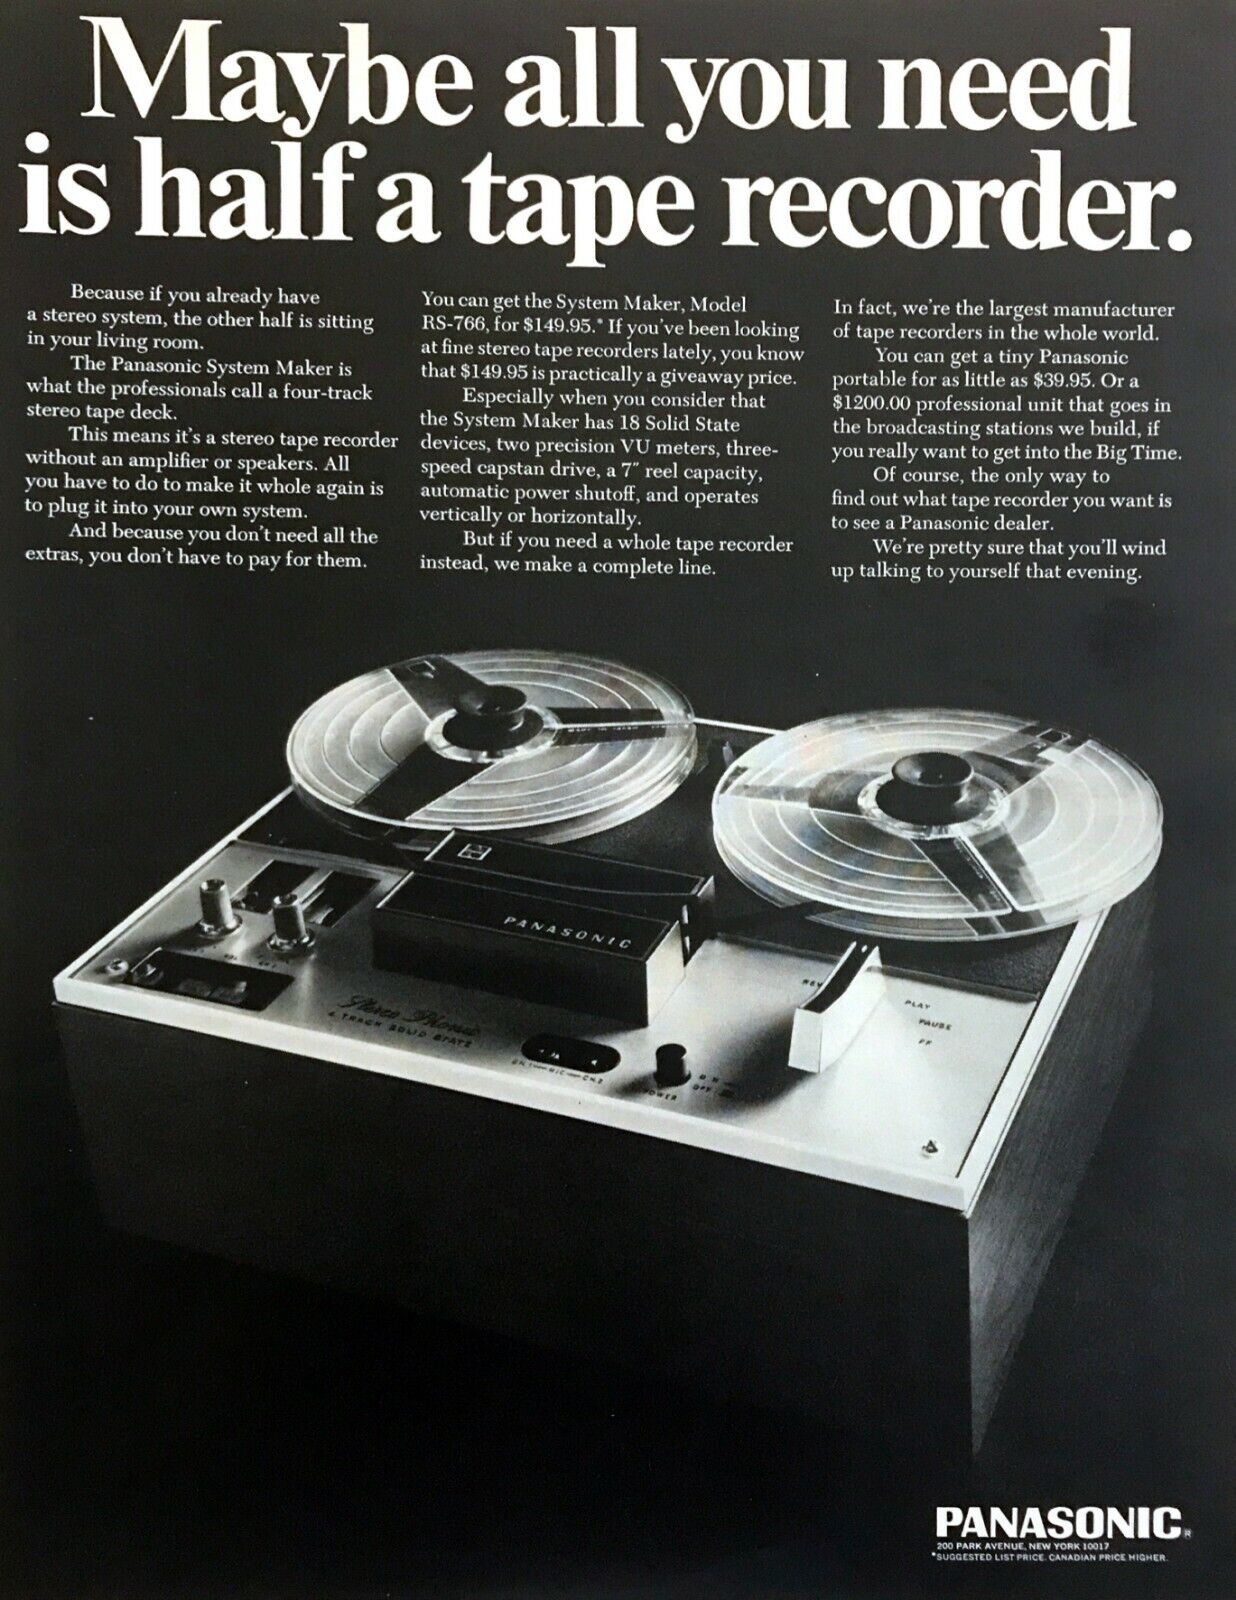 1967 Panasonic System Maker Stereo Tape Recorder photo vintage print ad